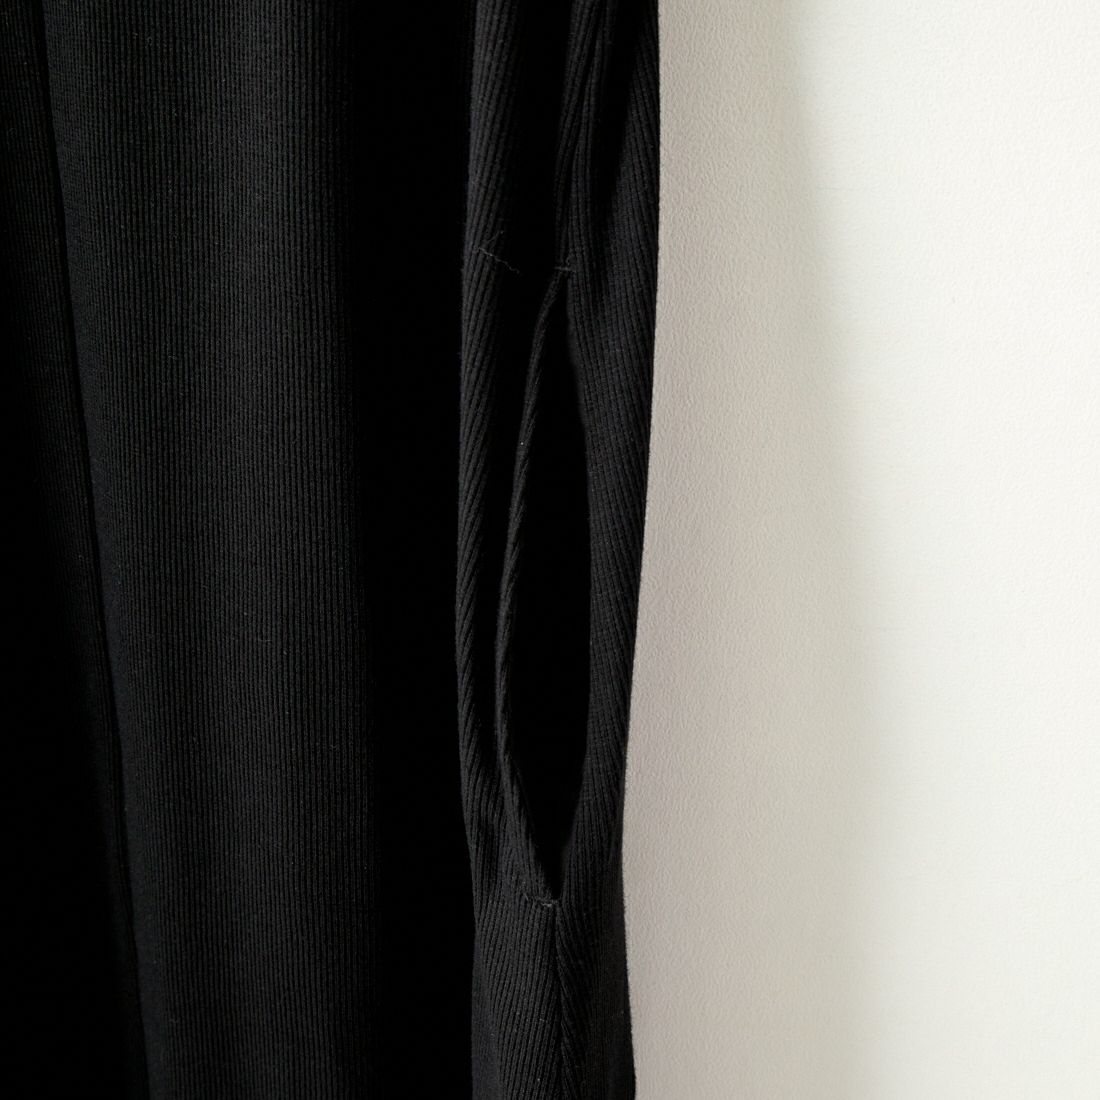 Maison de L'allure [メゾン ドゥ ラリュール] 裾フレアリブニットワンピース [22142014] BLACK/OFF